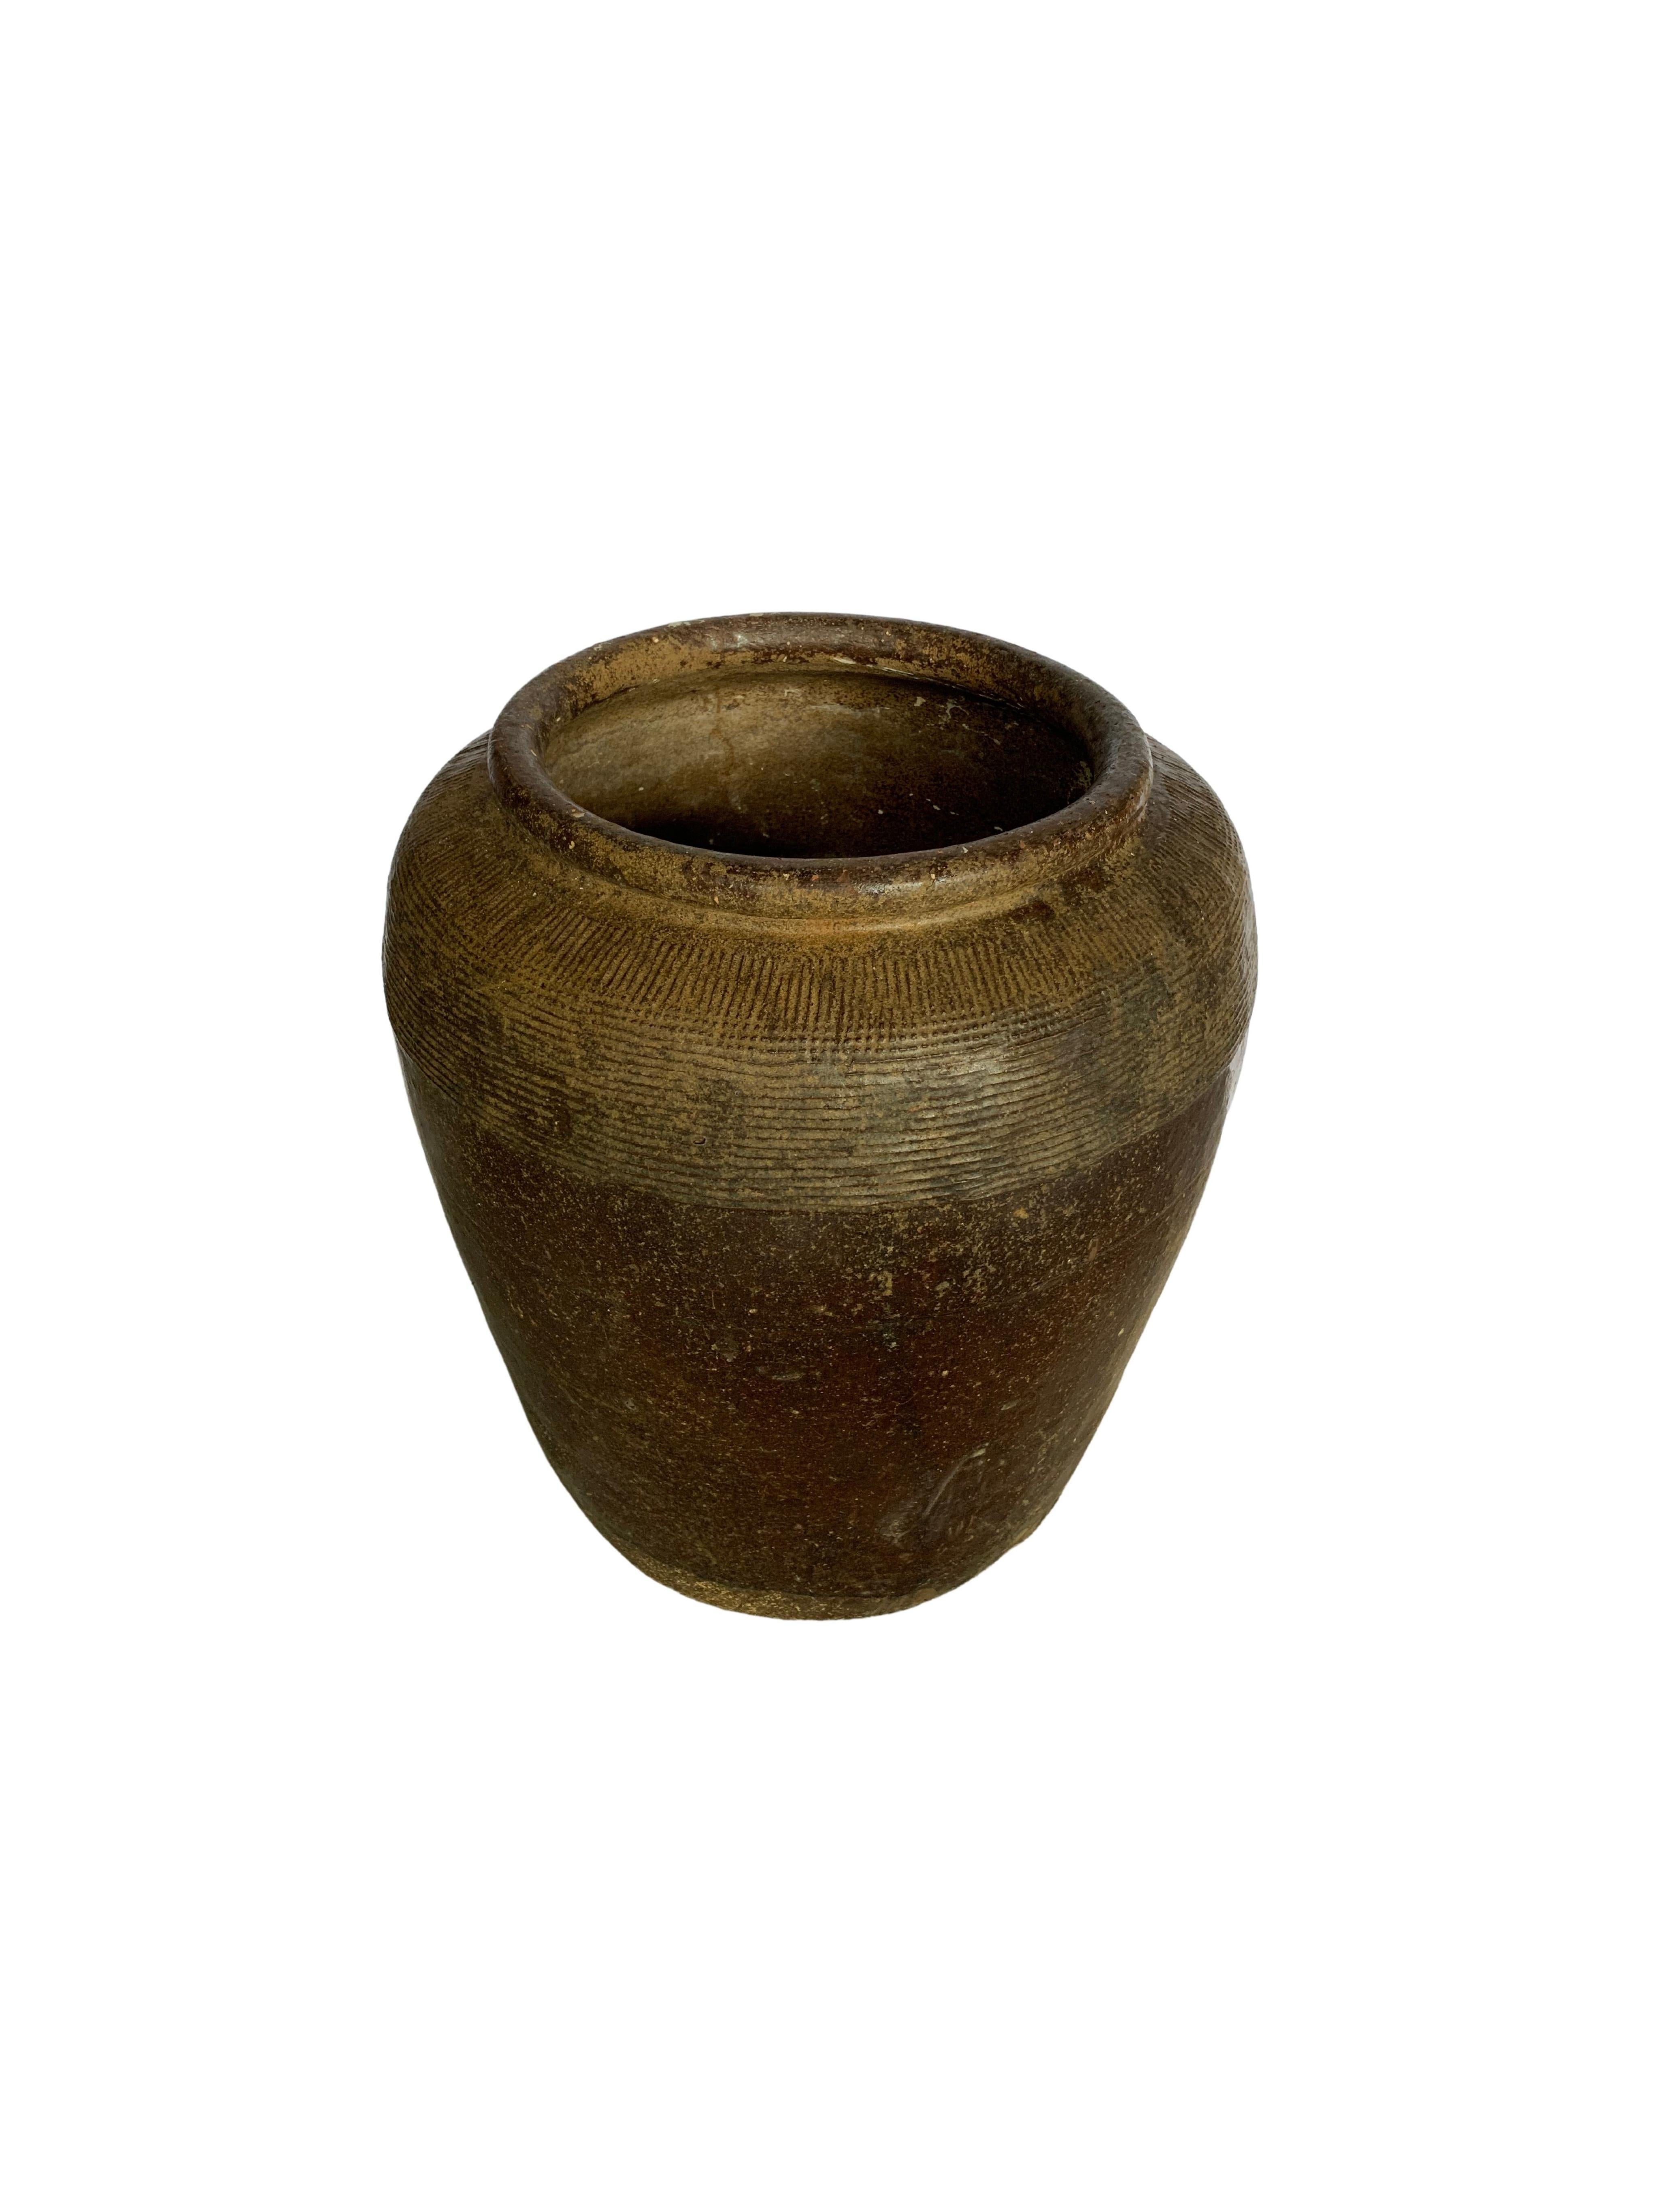 Qing Antique Chinese Brown Glazed Ceramic Salty Egg Jar, c. 1900 For Sale